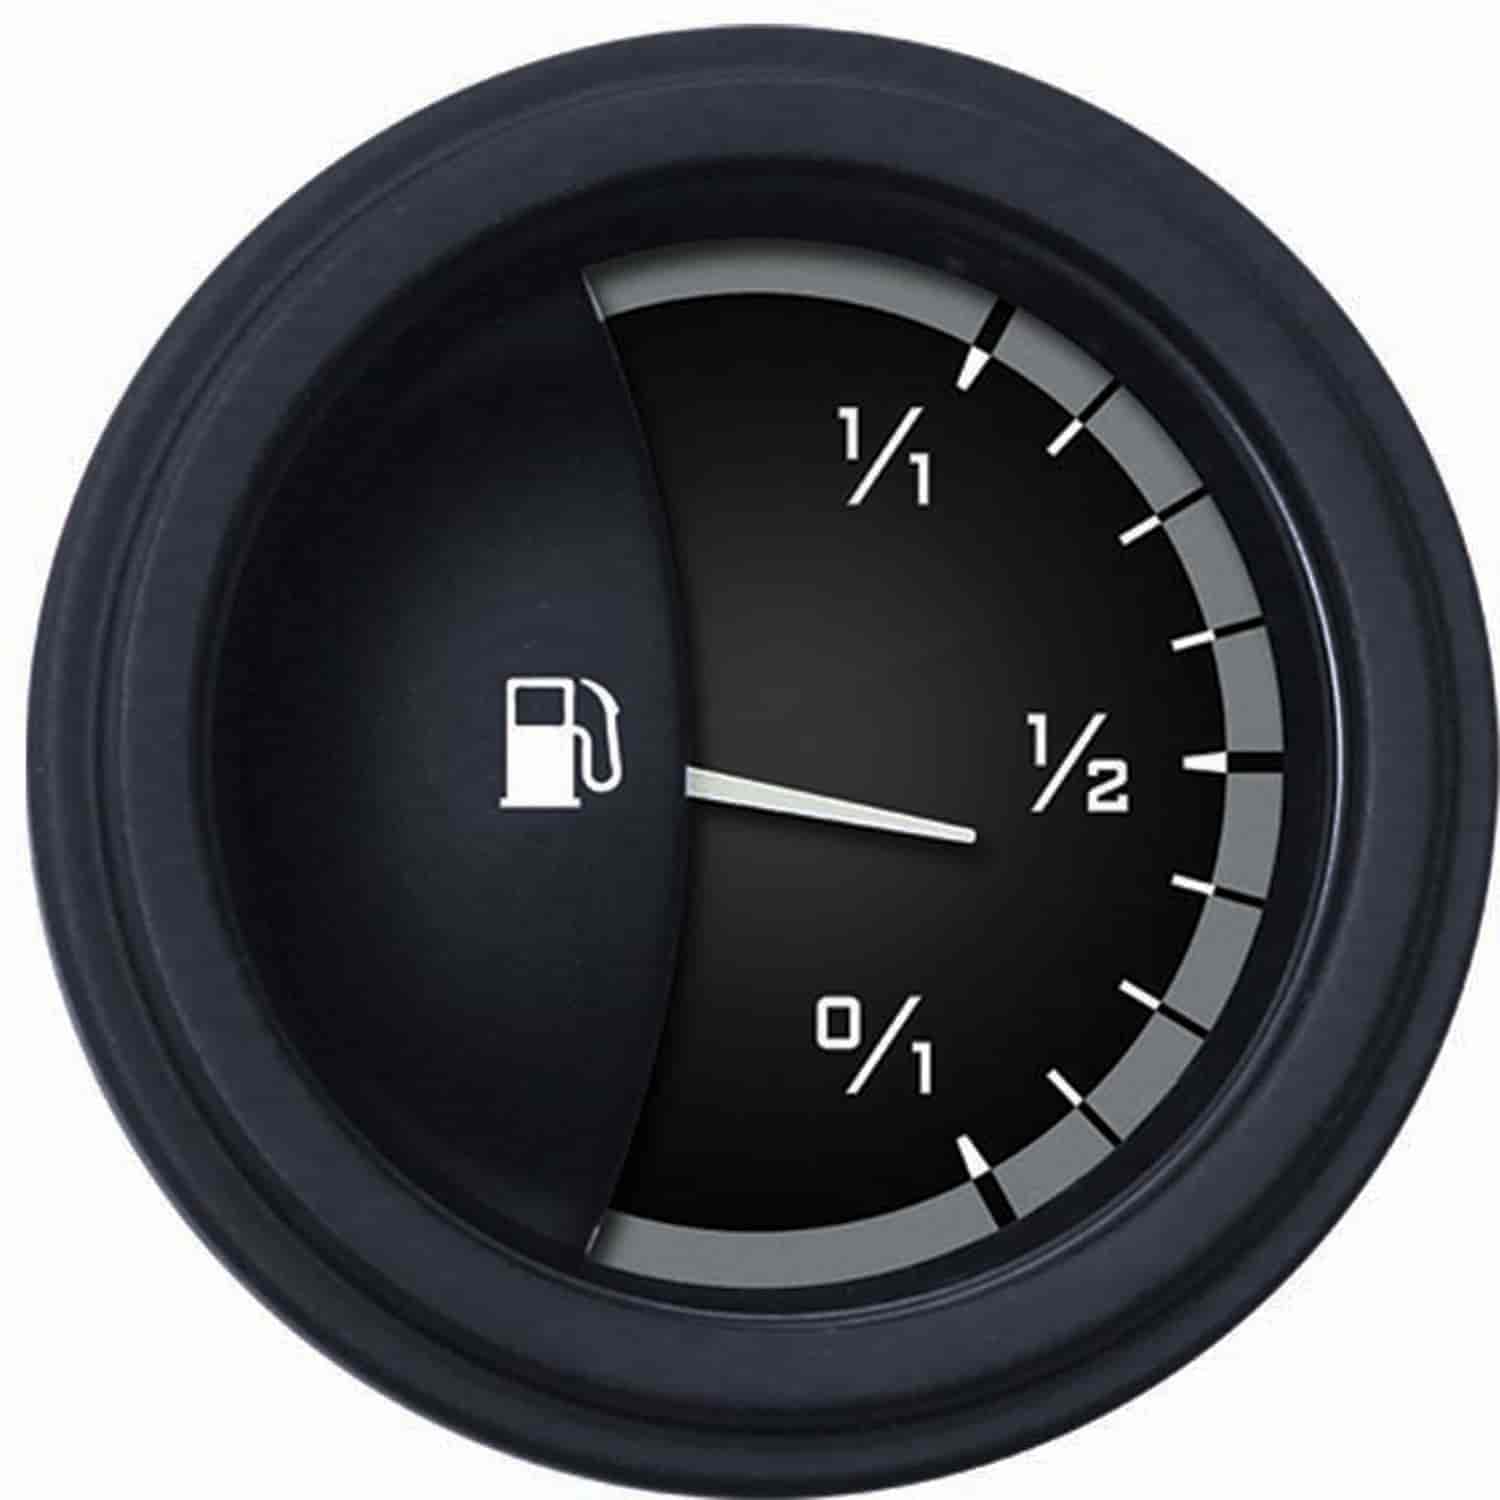 Gray AutoCross Series Fuel Gauge 2-1/8" Electrical